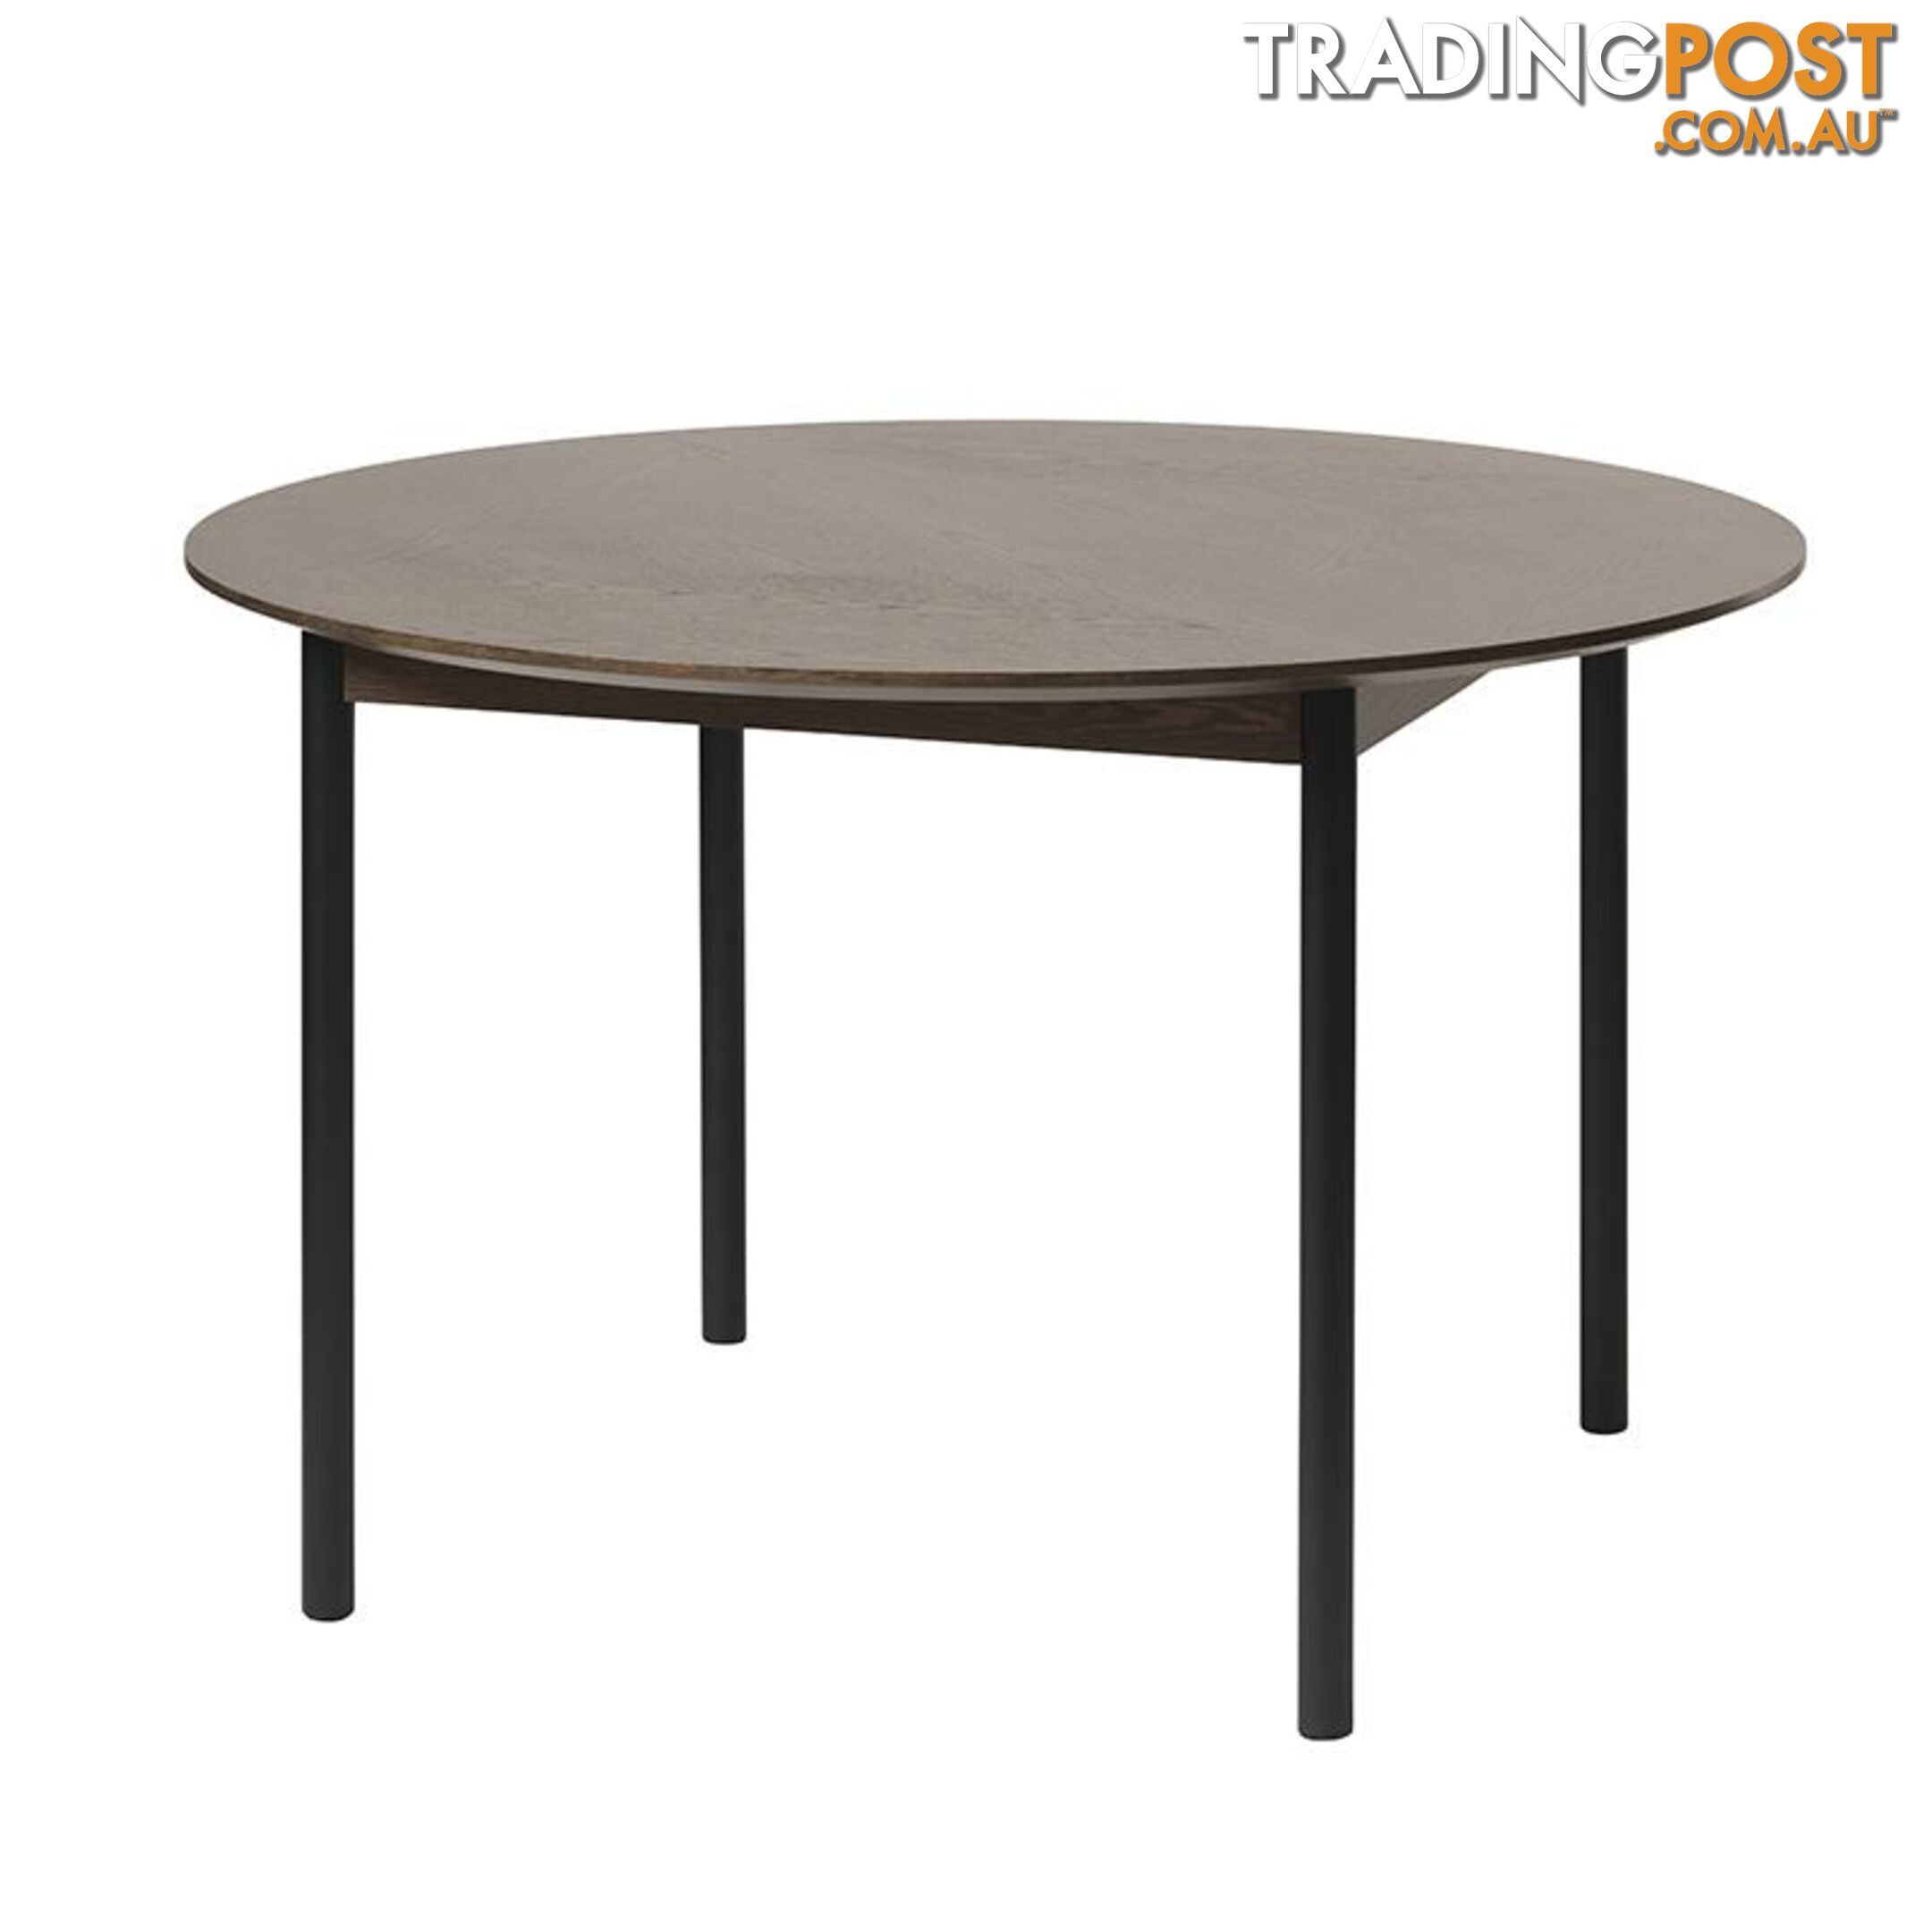 LATINA Round Dining Table 120cm -  Dark Brown / Black - 43603180 - 5704745100302